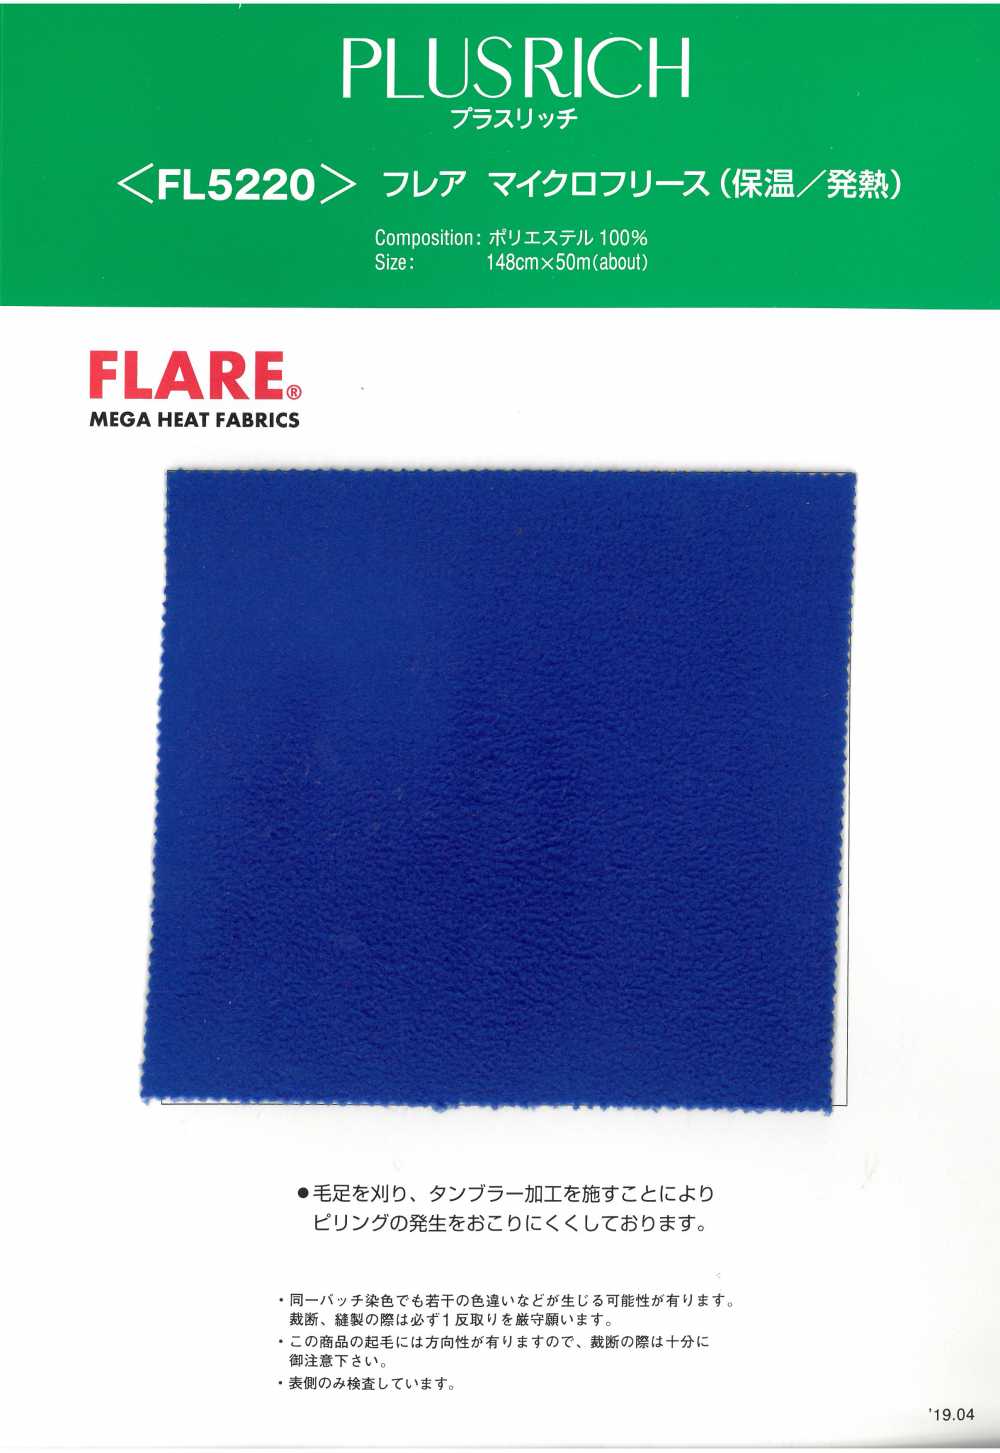 FL5220 FLARE® Micro Fleece(Warmth / Heat)[Textile / Fabric]